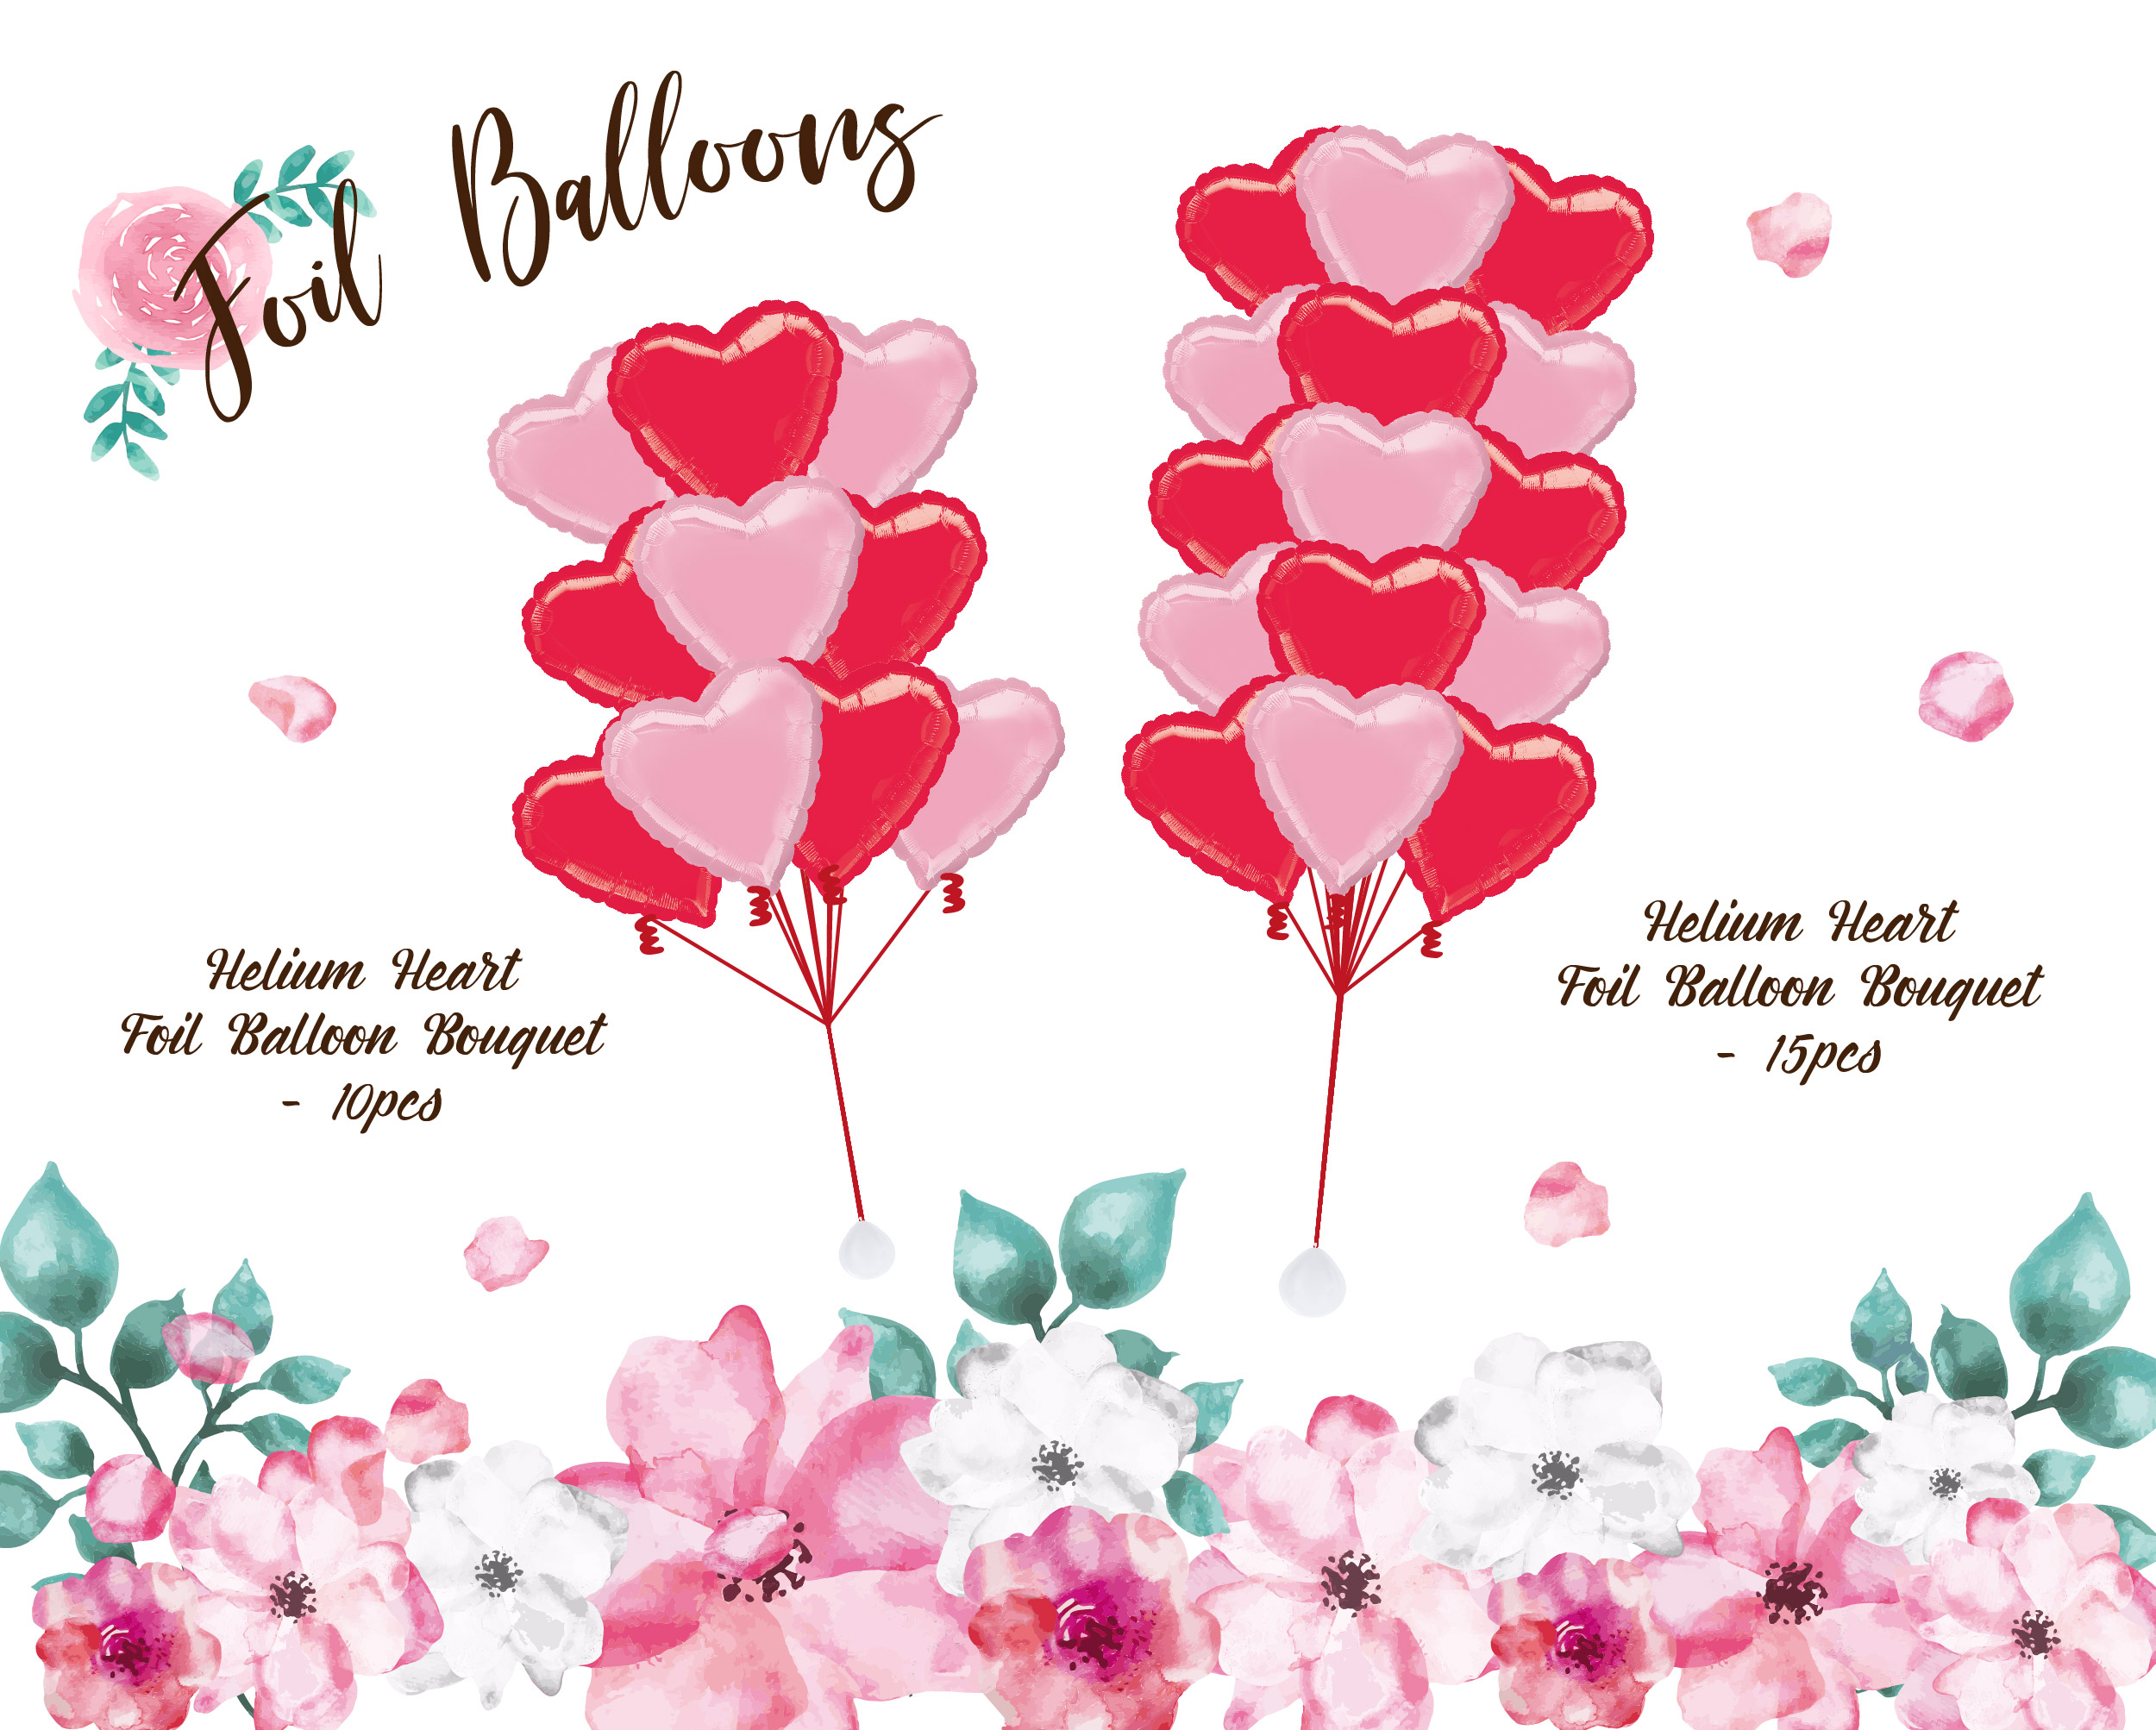 Valentine's Day Foil Balloons Bouquet